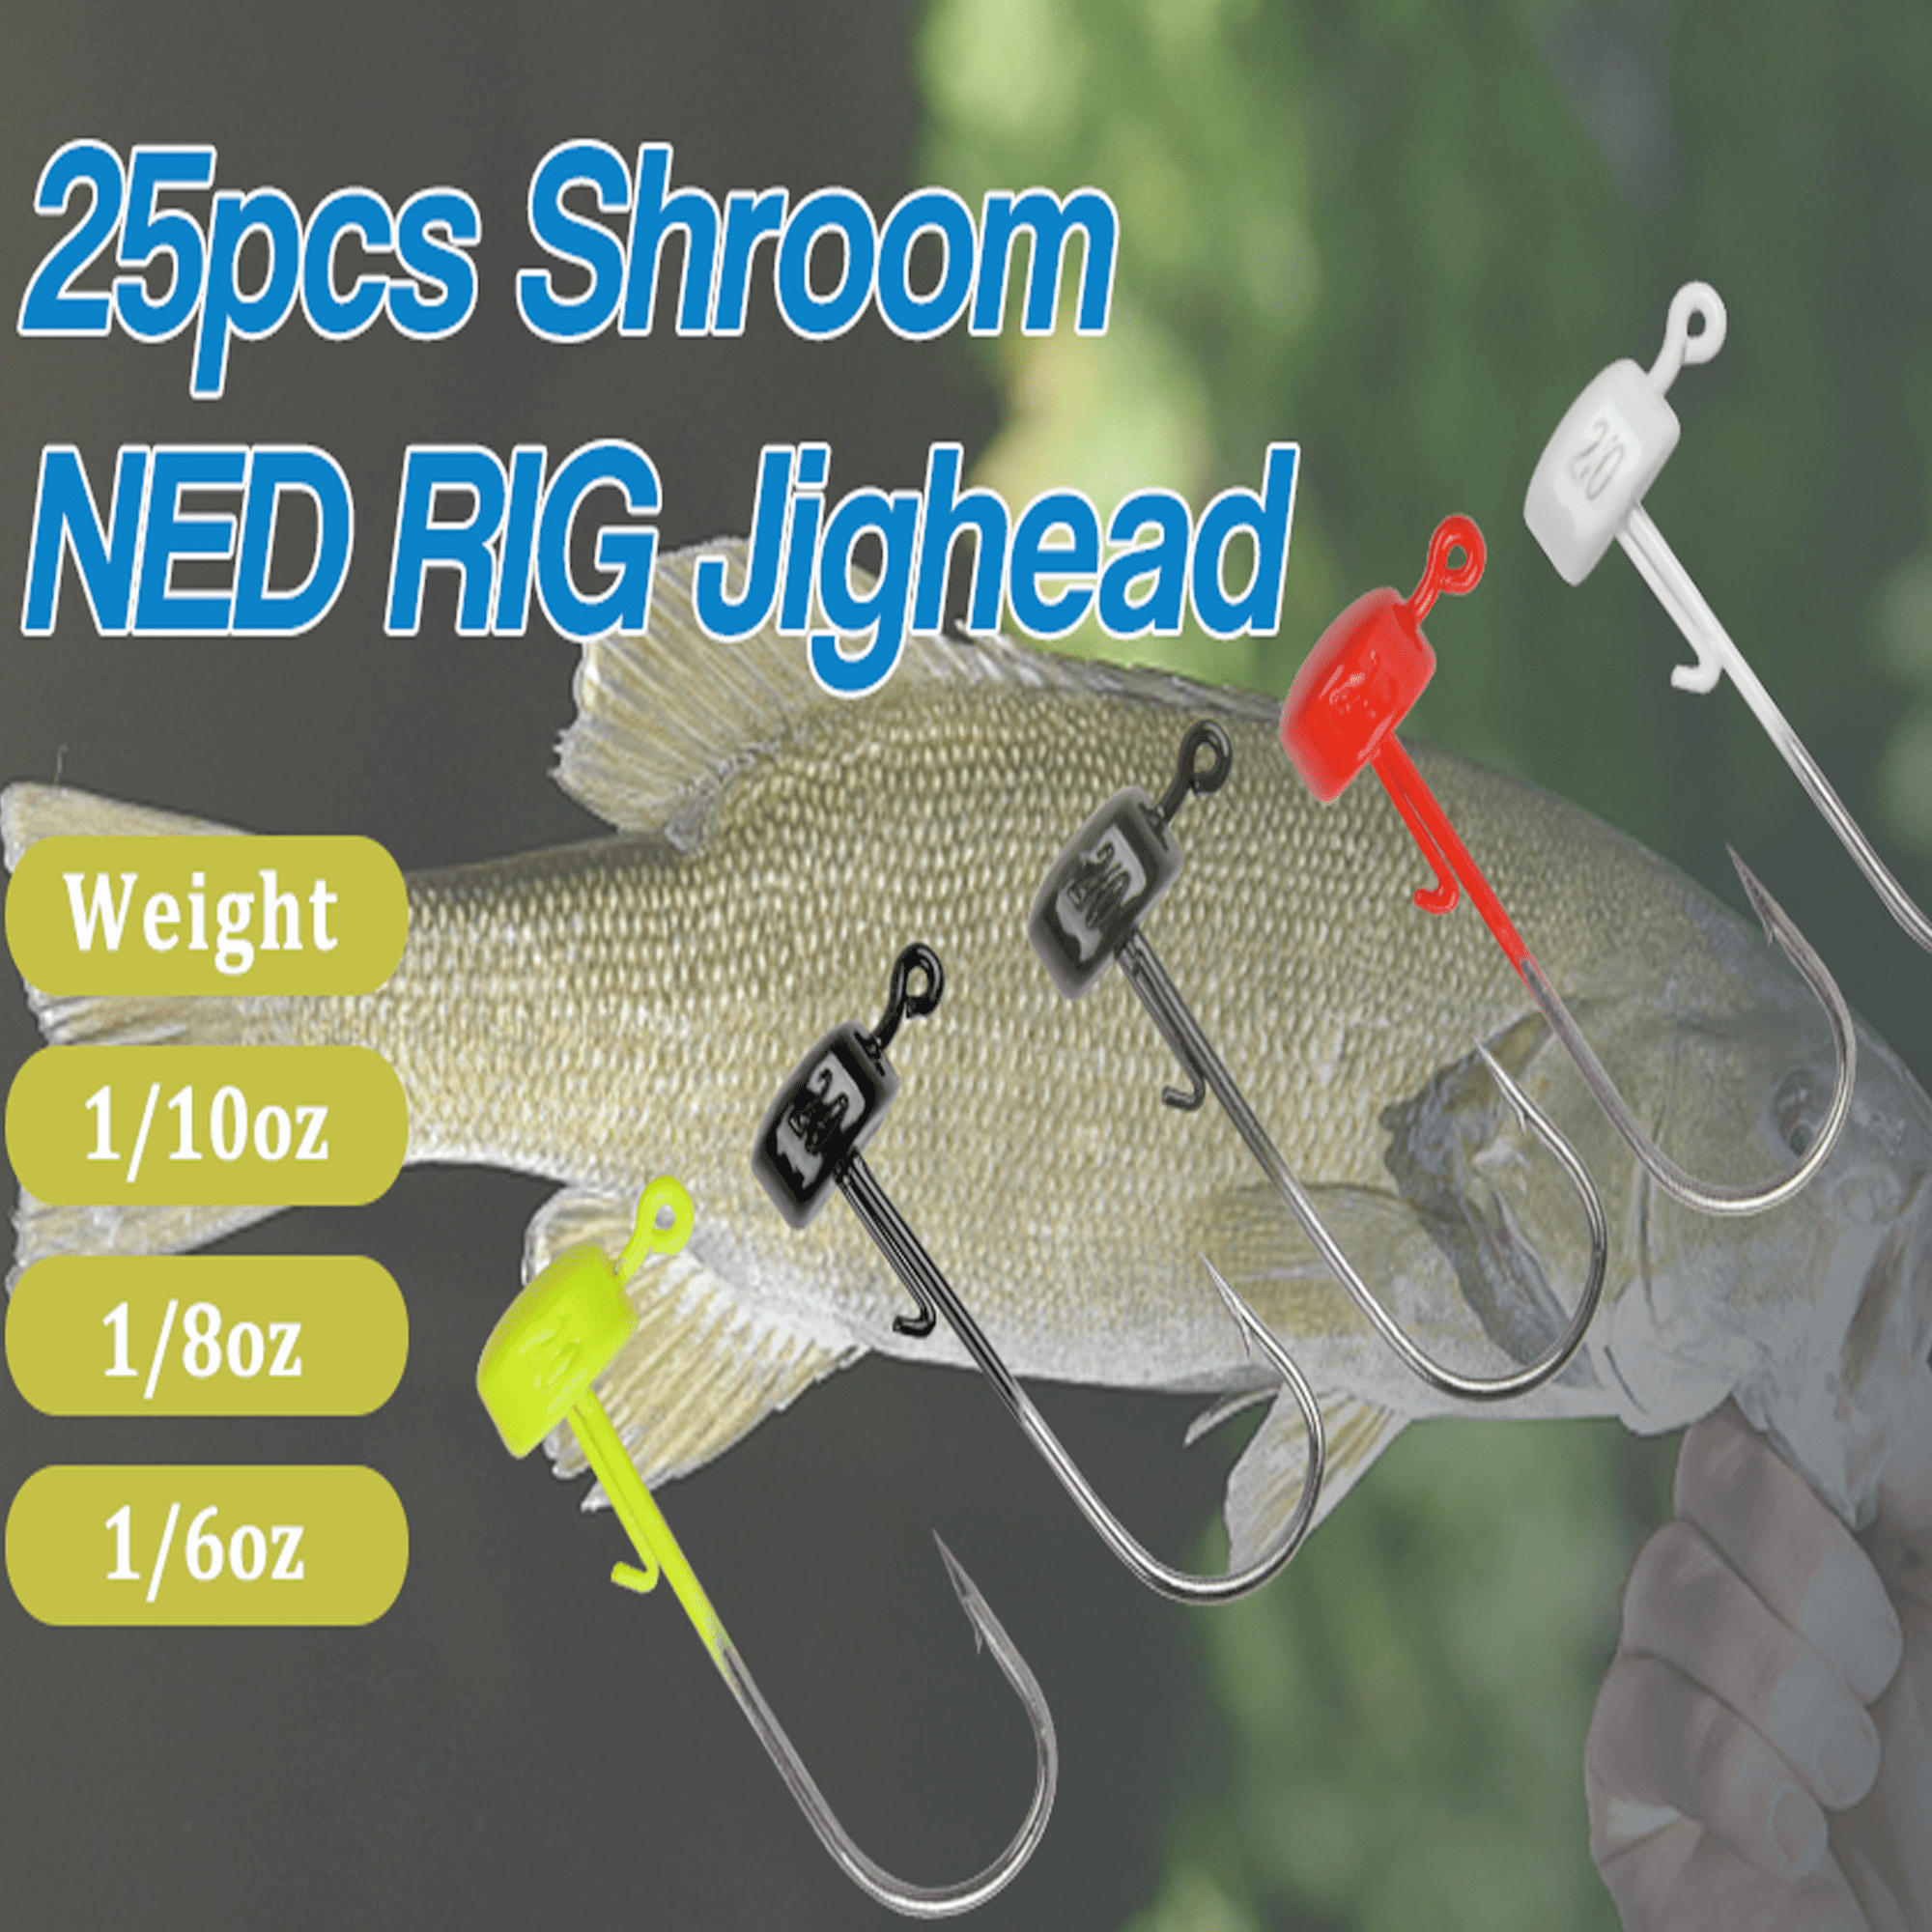 OROOTL Ned Rig Jig Heads Kit, 20Pcs Ned Rig Baits Hooks Finesse Mushroom  Jig Heads Fishing Crappie Jig Hooks Weedless Jig Heads for Bass Fishing 